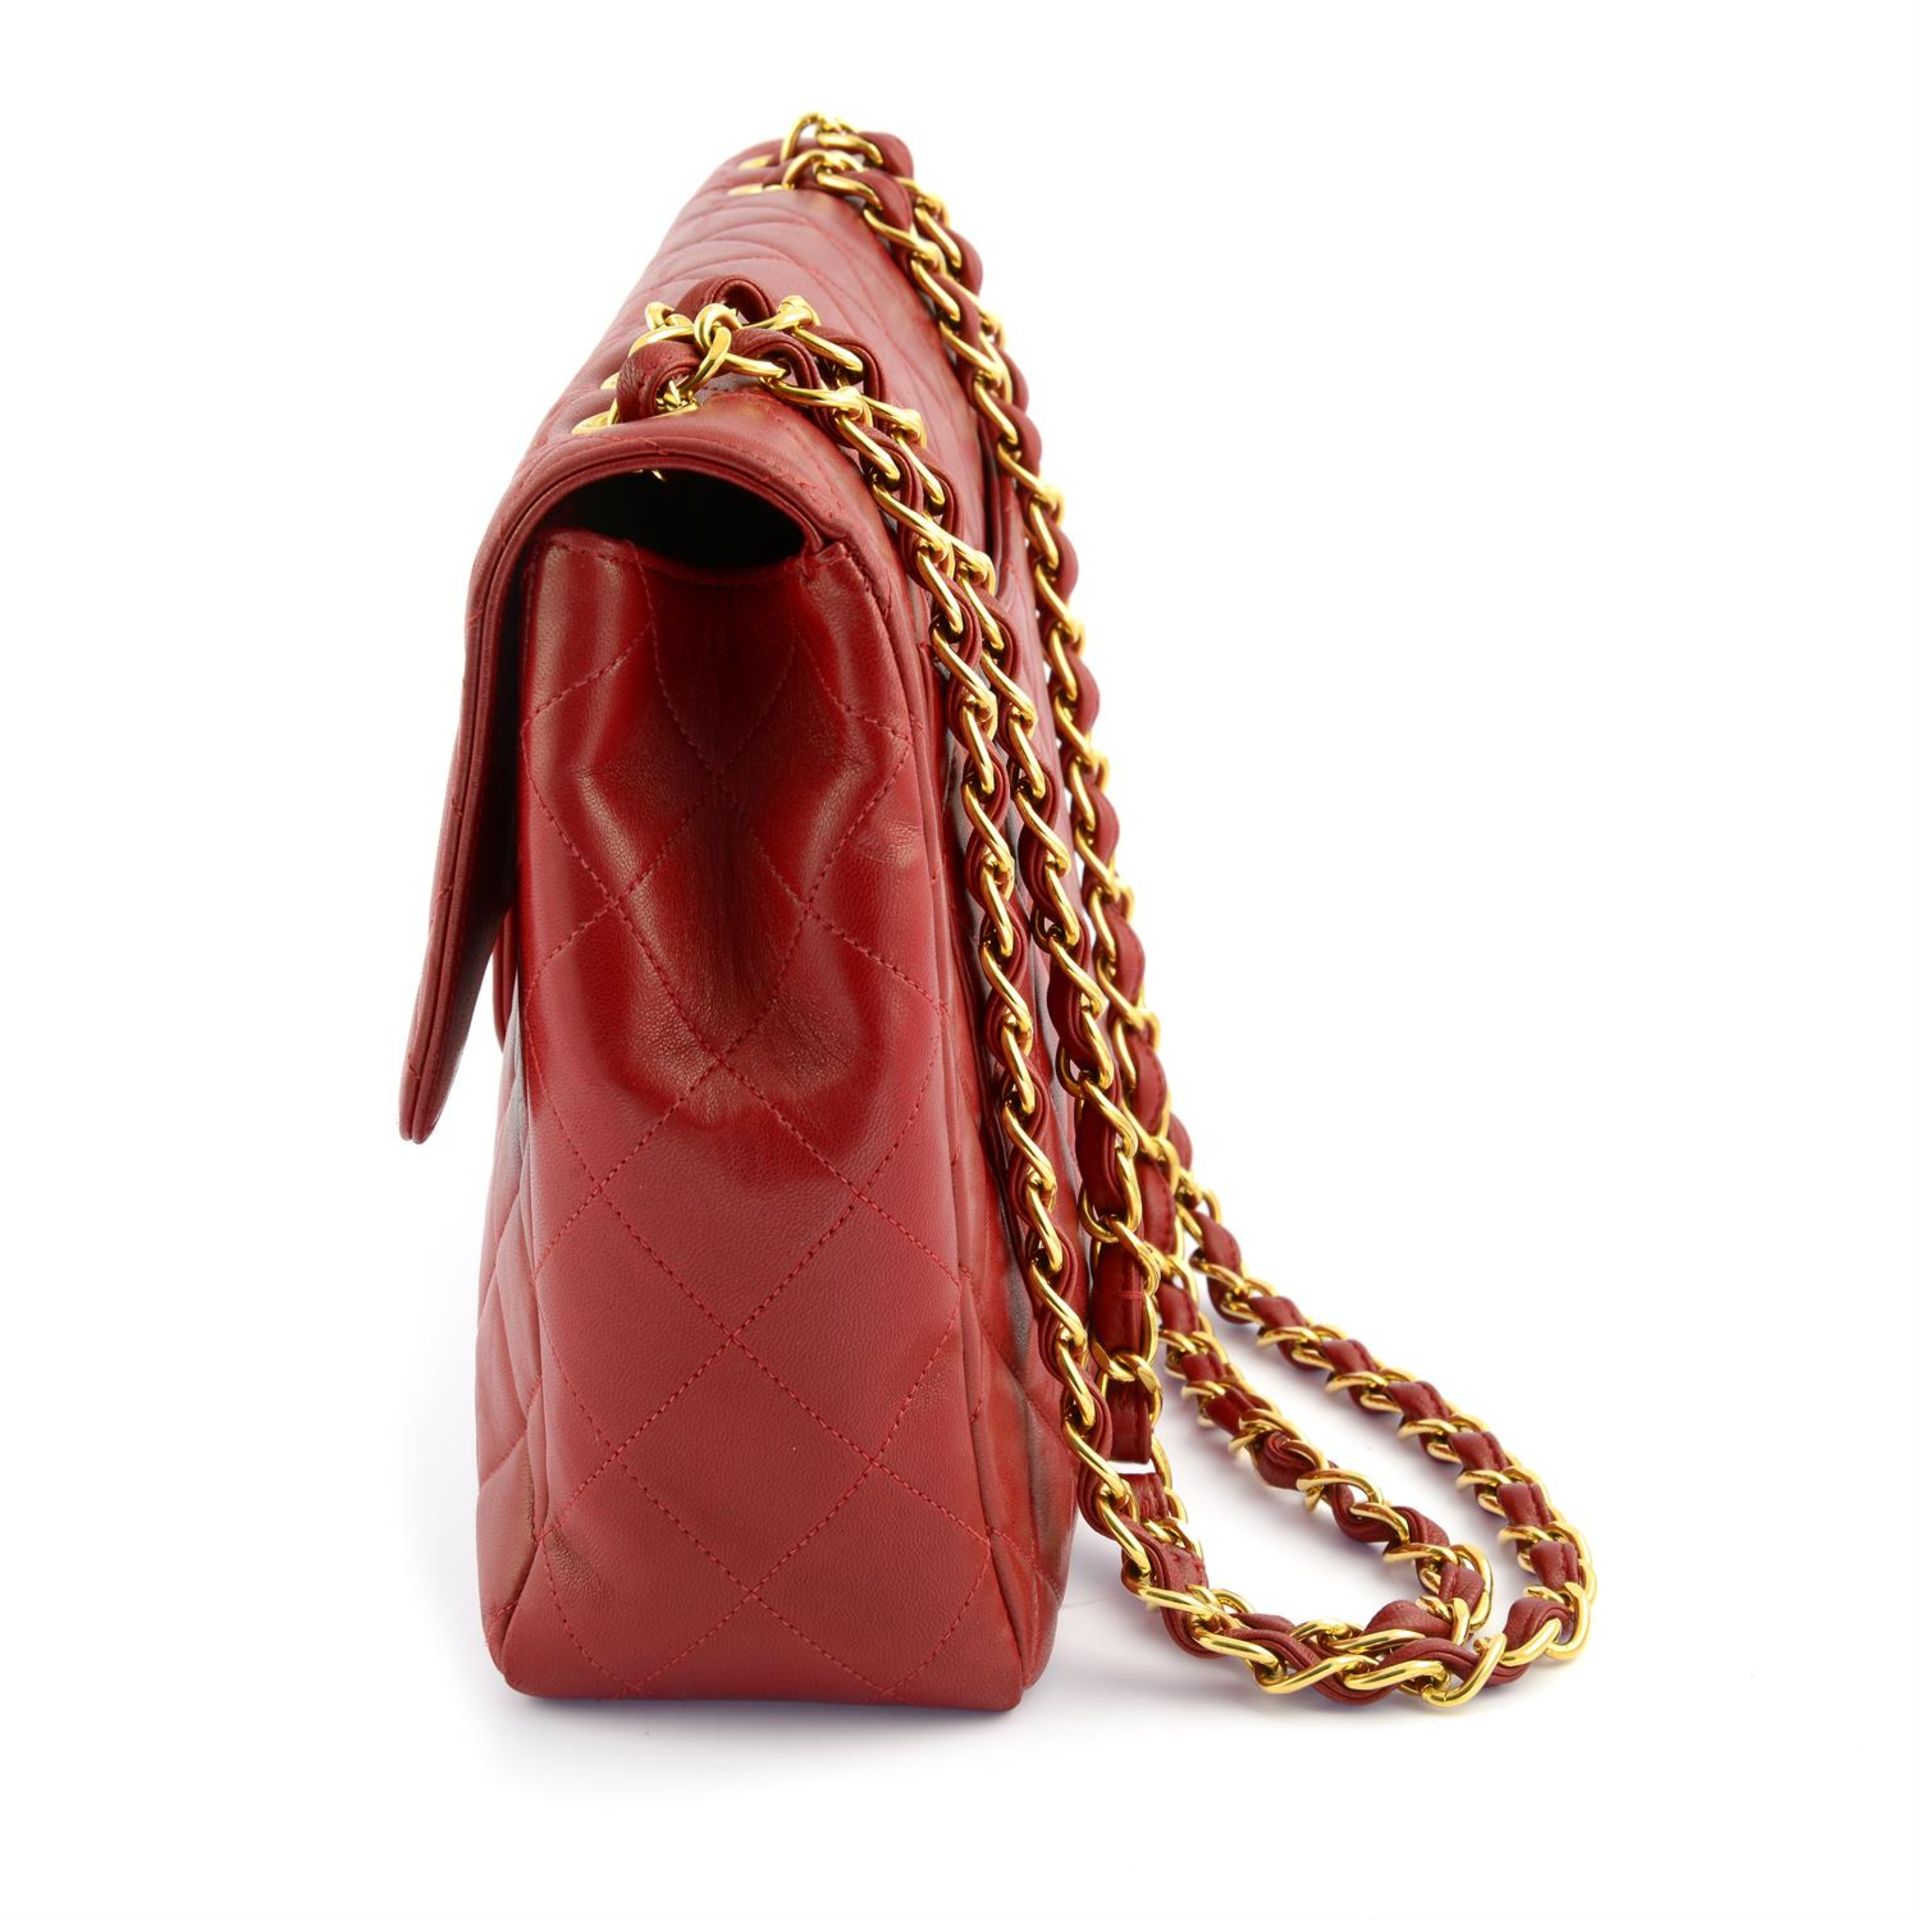 CHANEL - a red lambskin leather Jumbo flap handbag. - Bild 3 aus 6